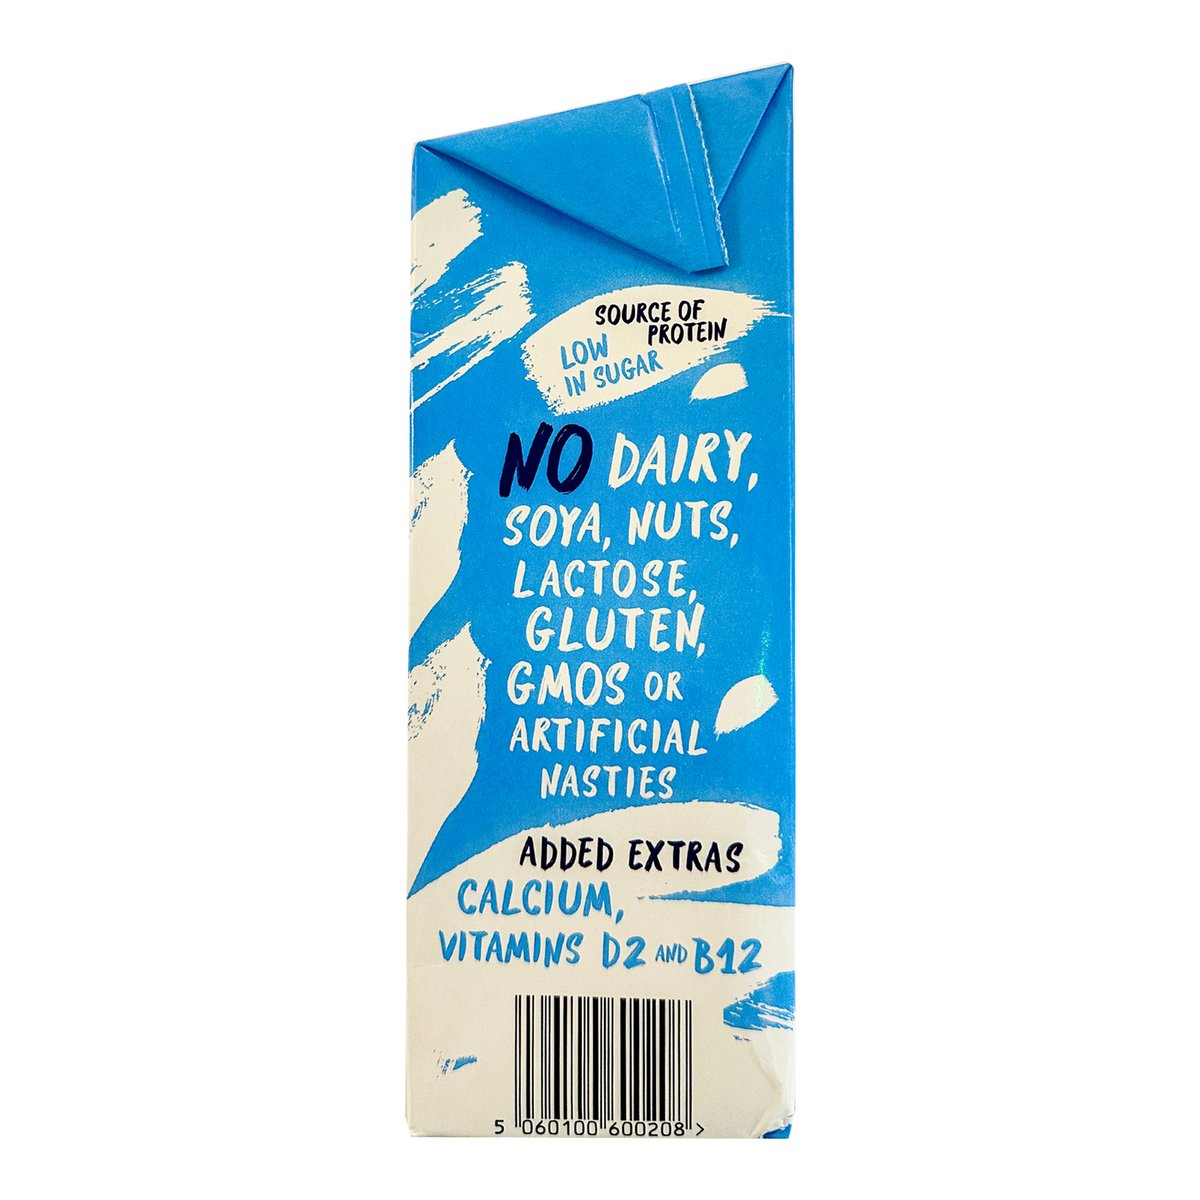 Koko Dairy Free Coconut Milk 1 Litre